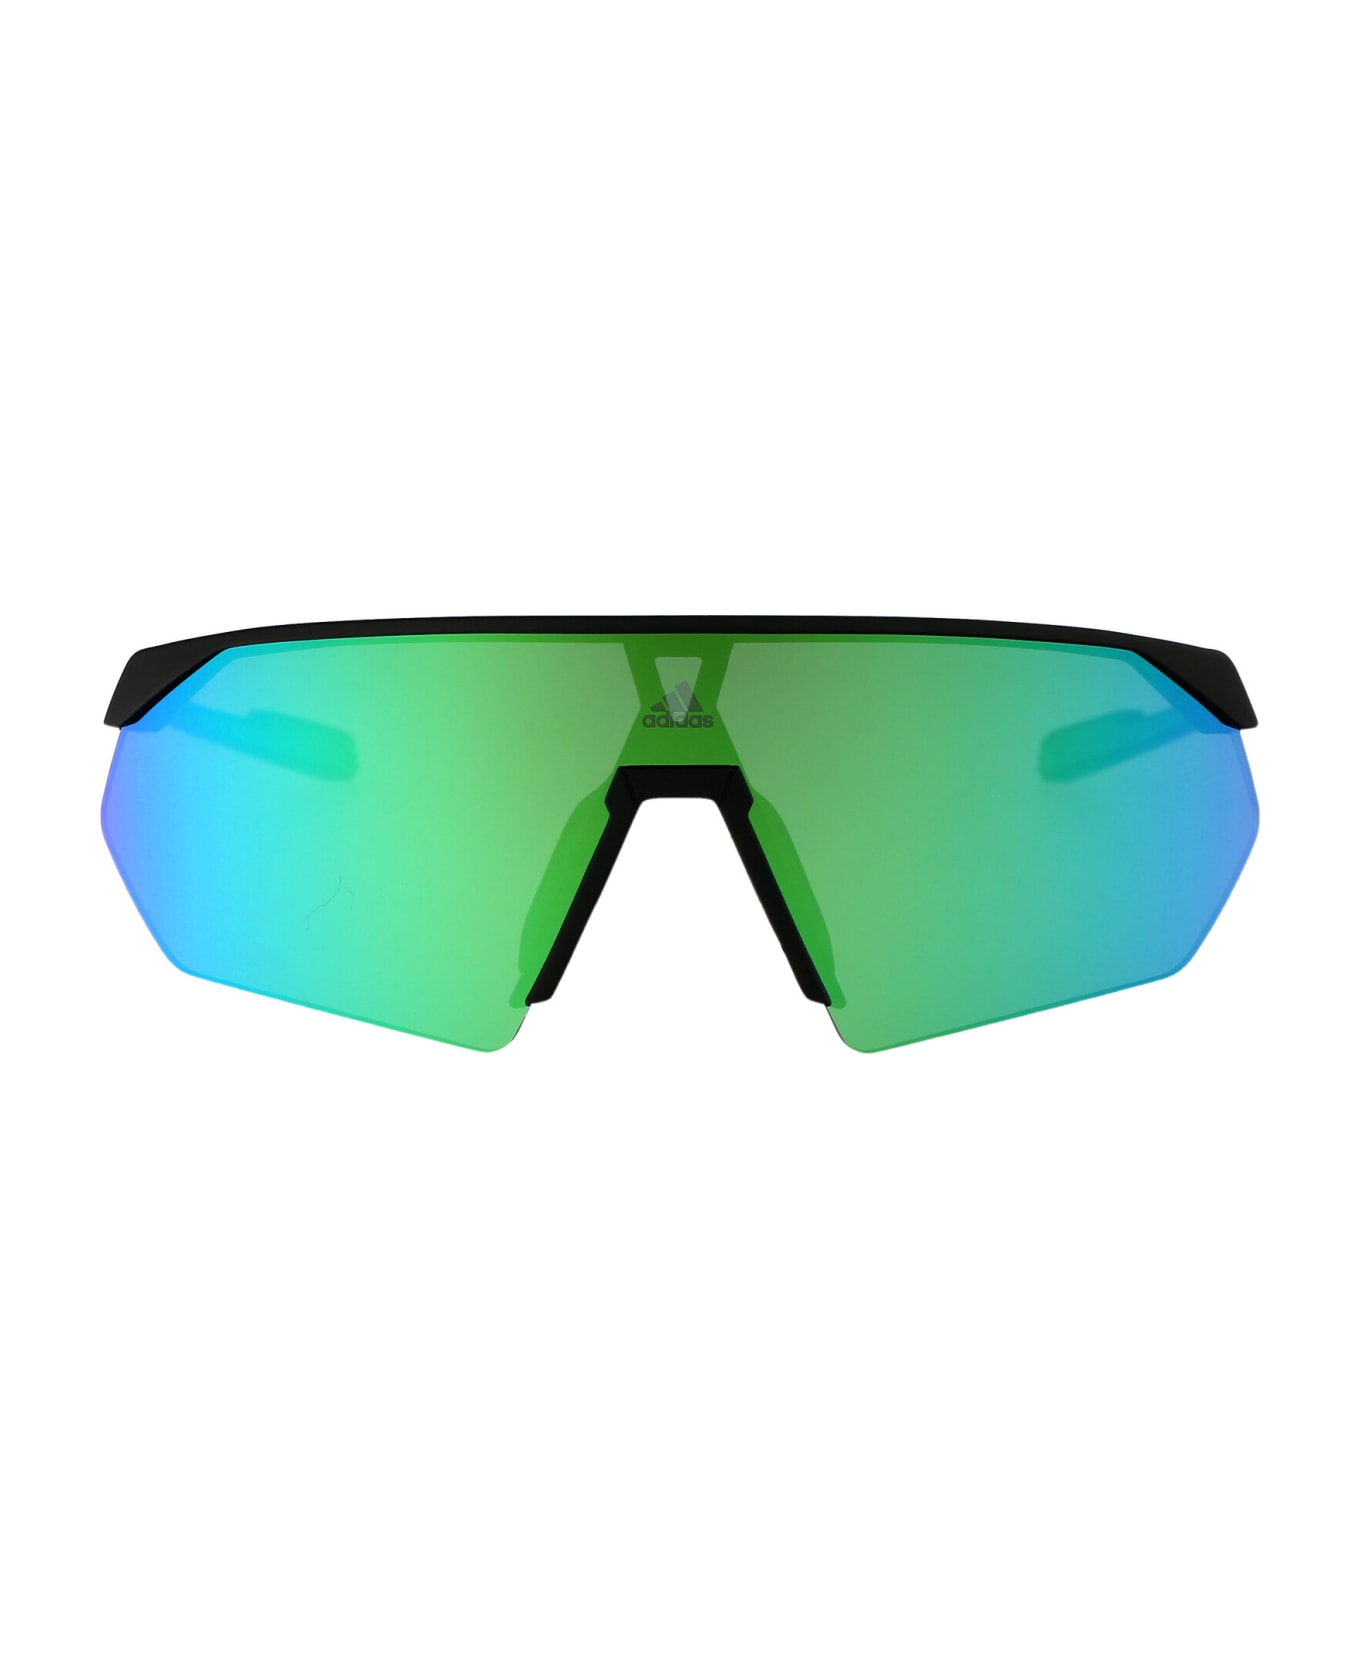 Adidas Prfm Shield Sunglasses - 02Q Nero Opaco/Verde Specchiato